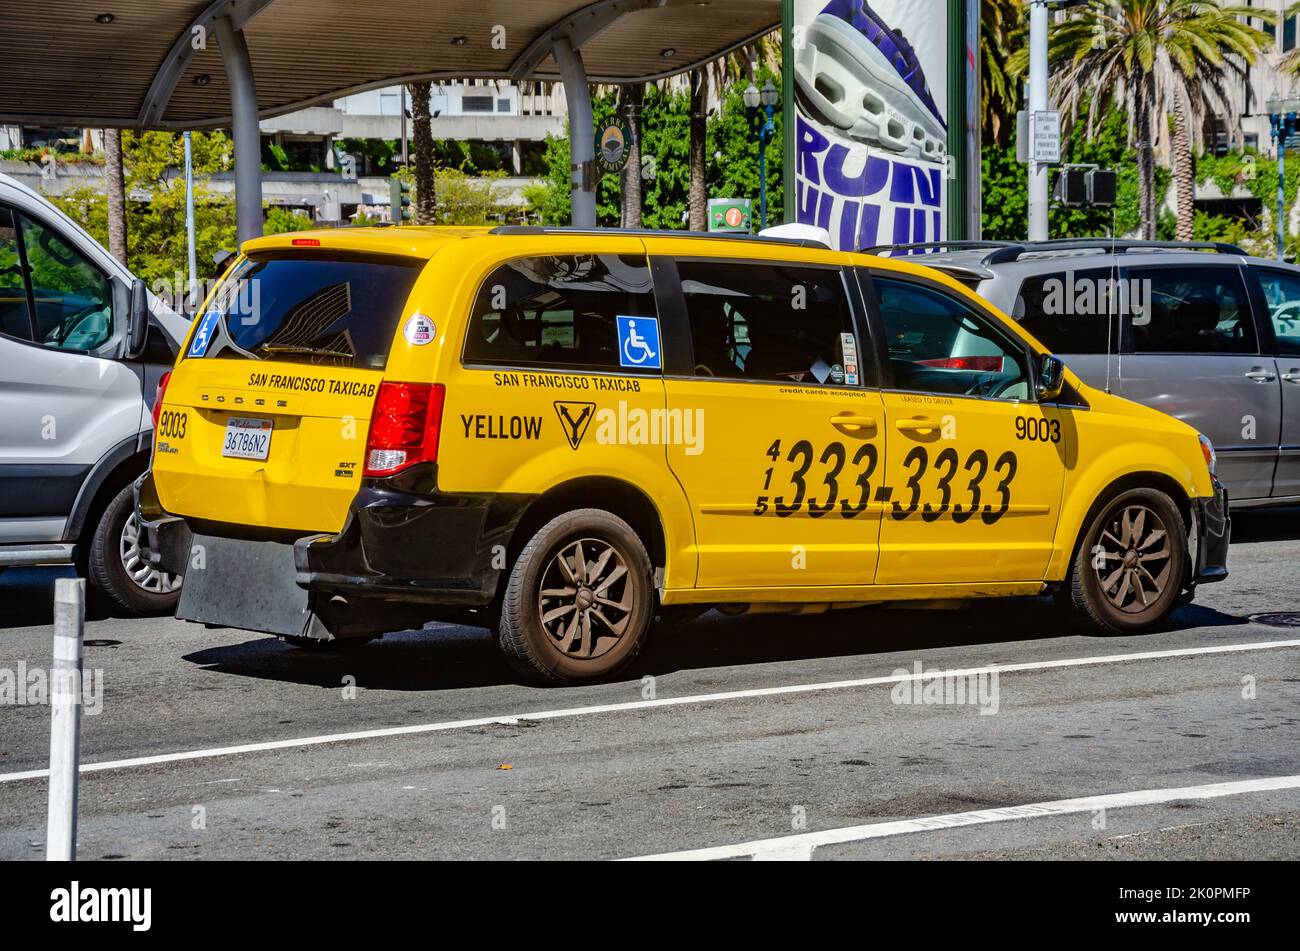 A yellow taxi cab stuck in traffic on Embarcadero in San Francisco, California, USA Stock Photo